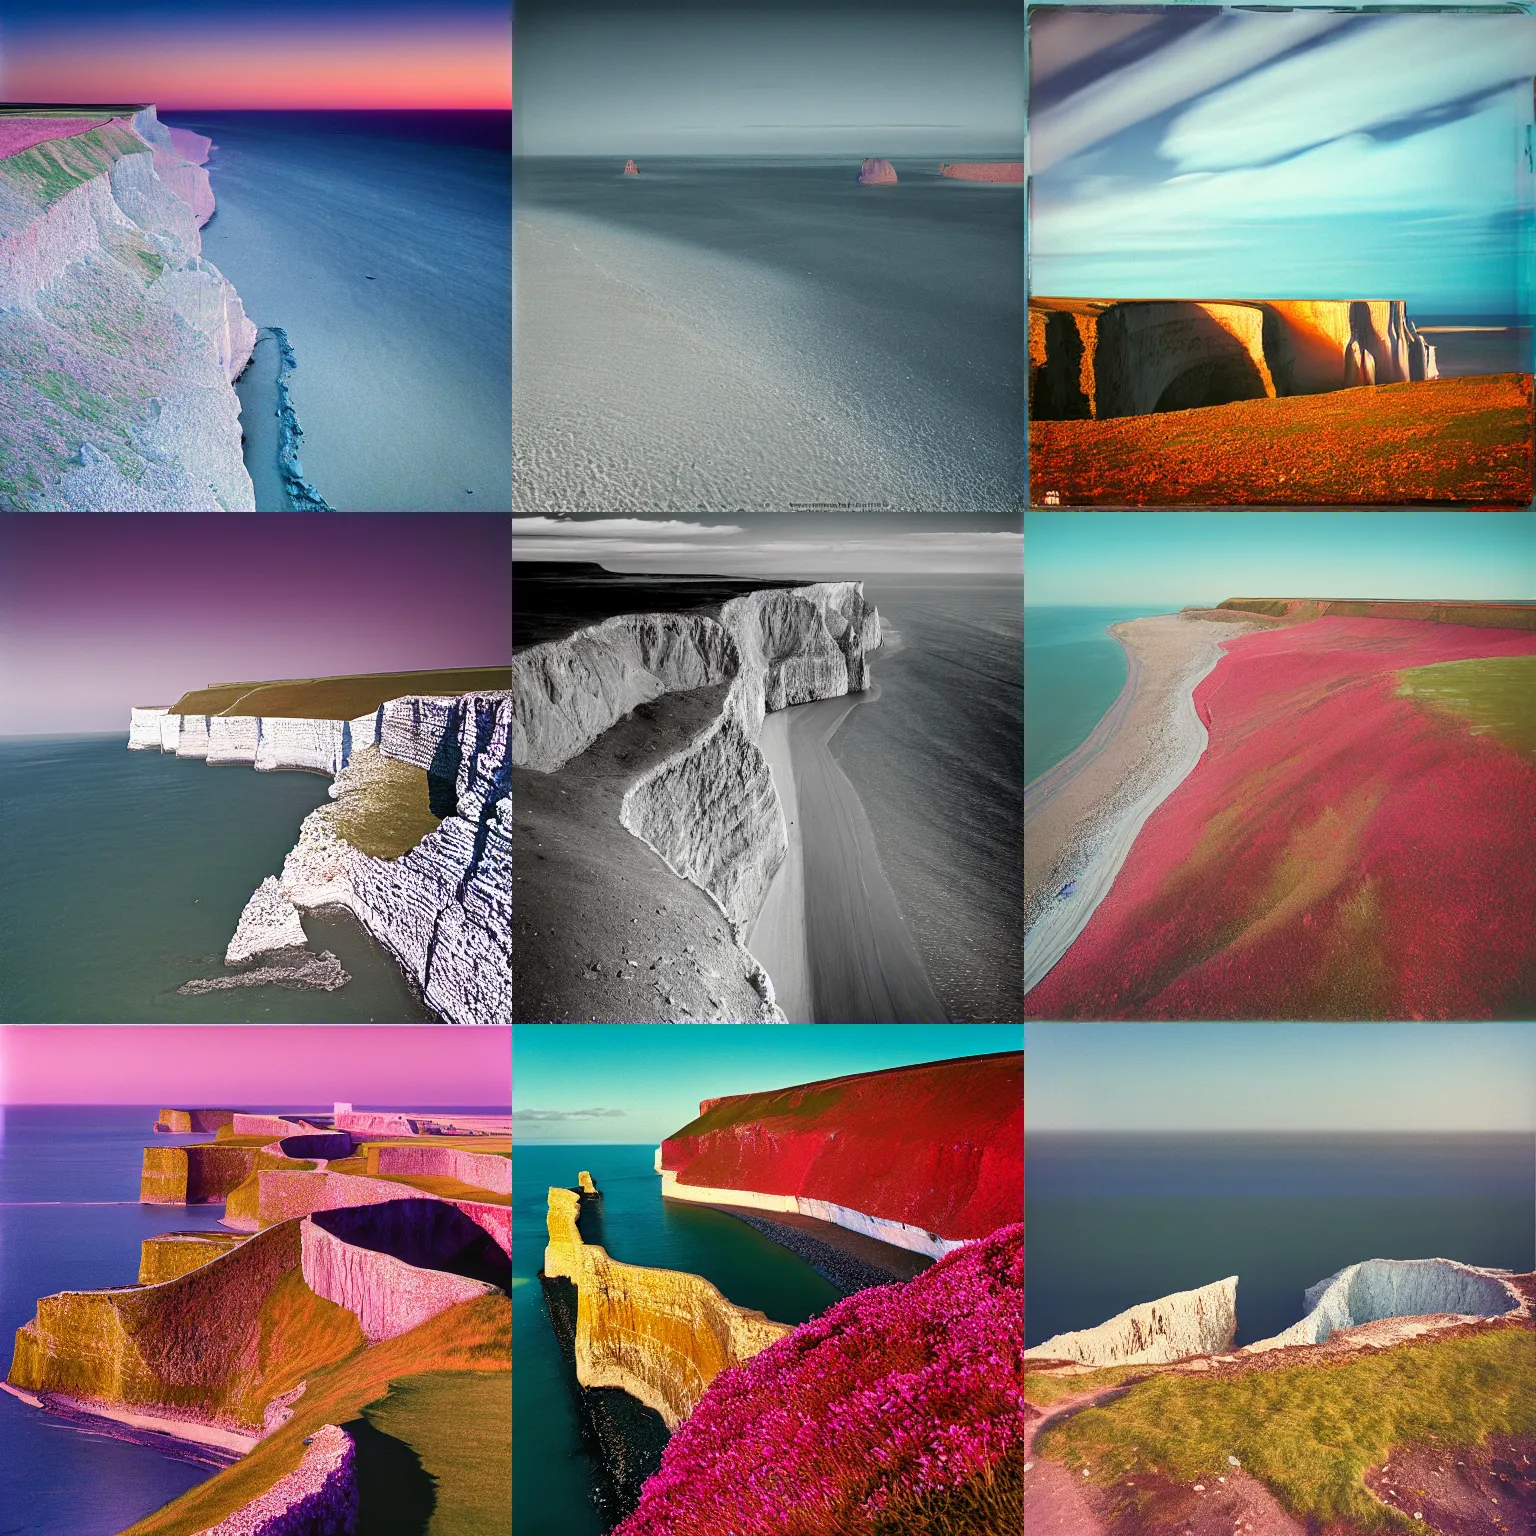 Prompt: Seven Sisters cliffs in Essex, hasselblad 907x xcd 30 f3.5 kodak aerochrome, professional photography